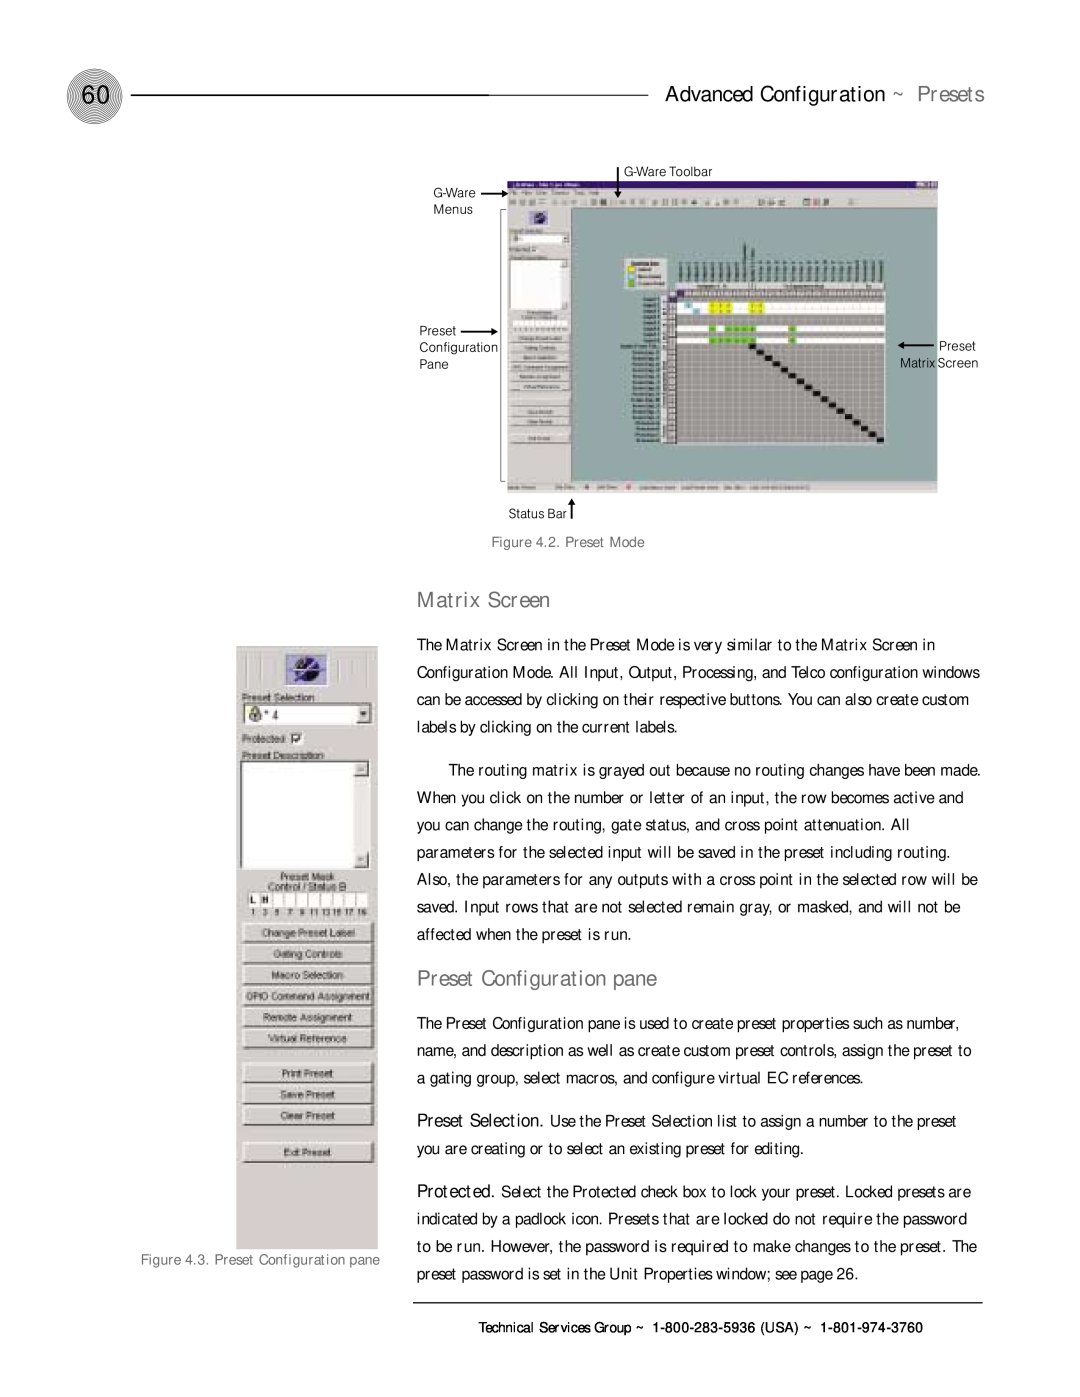 ClearOne comm XAP 400 operation manual Matrix Screen, Preset Configuration pane, Advanced Configuration ~ Presets 